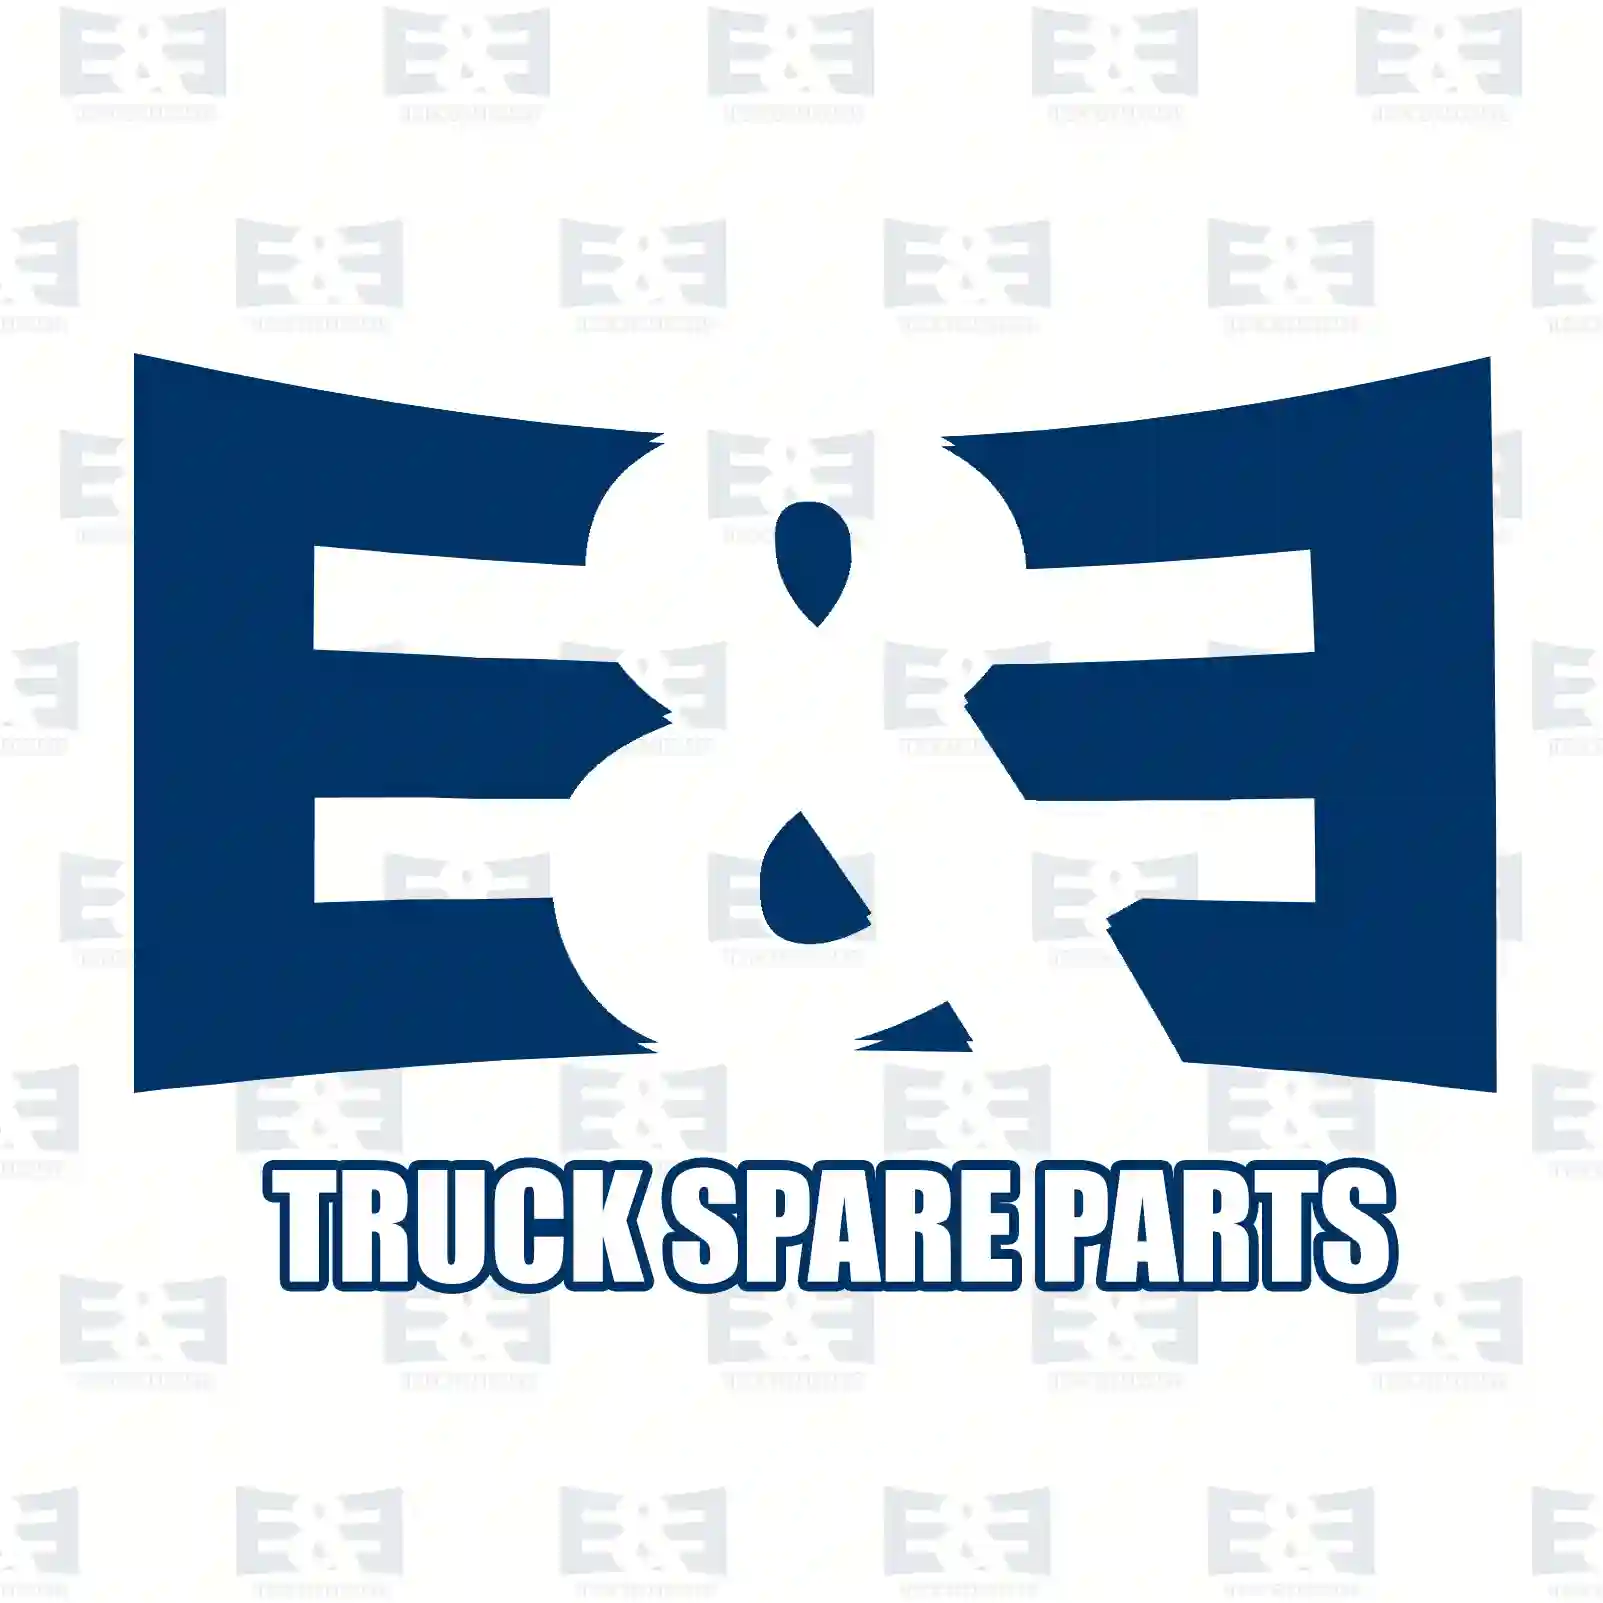 Propeller Shaft Flange, EE No 2E2276989 ,  oem no:4004110411, 3894110411, 6544110511 E&E Truck Spare Parts | Truck Spare Parts, Auotomotive Spare Parts